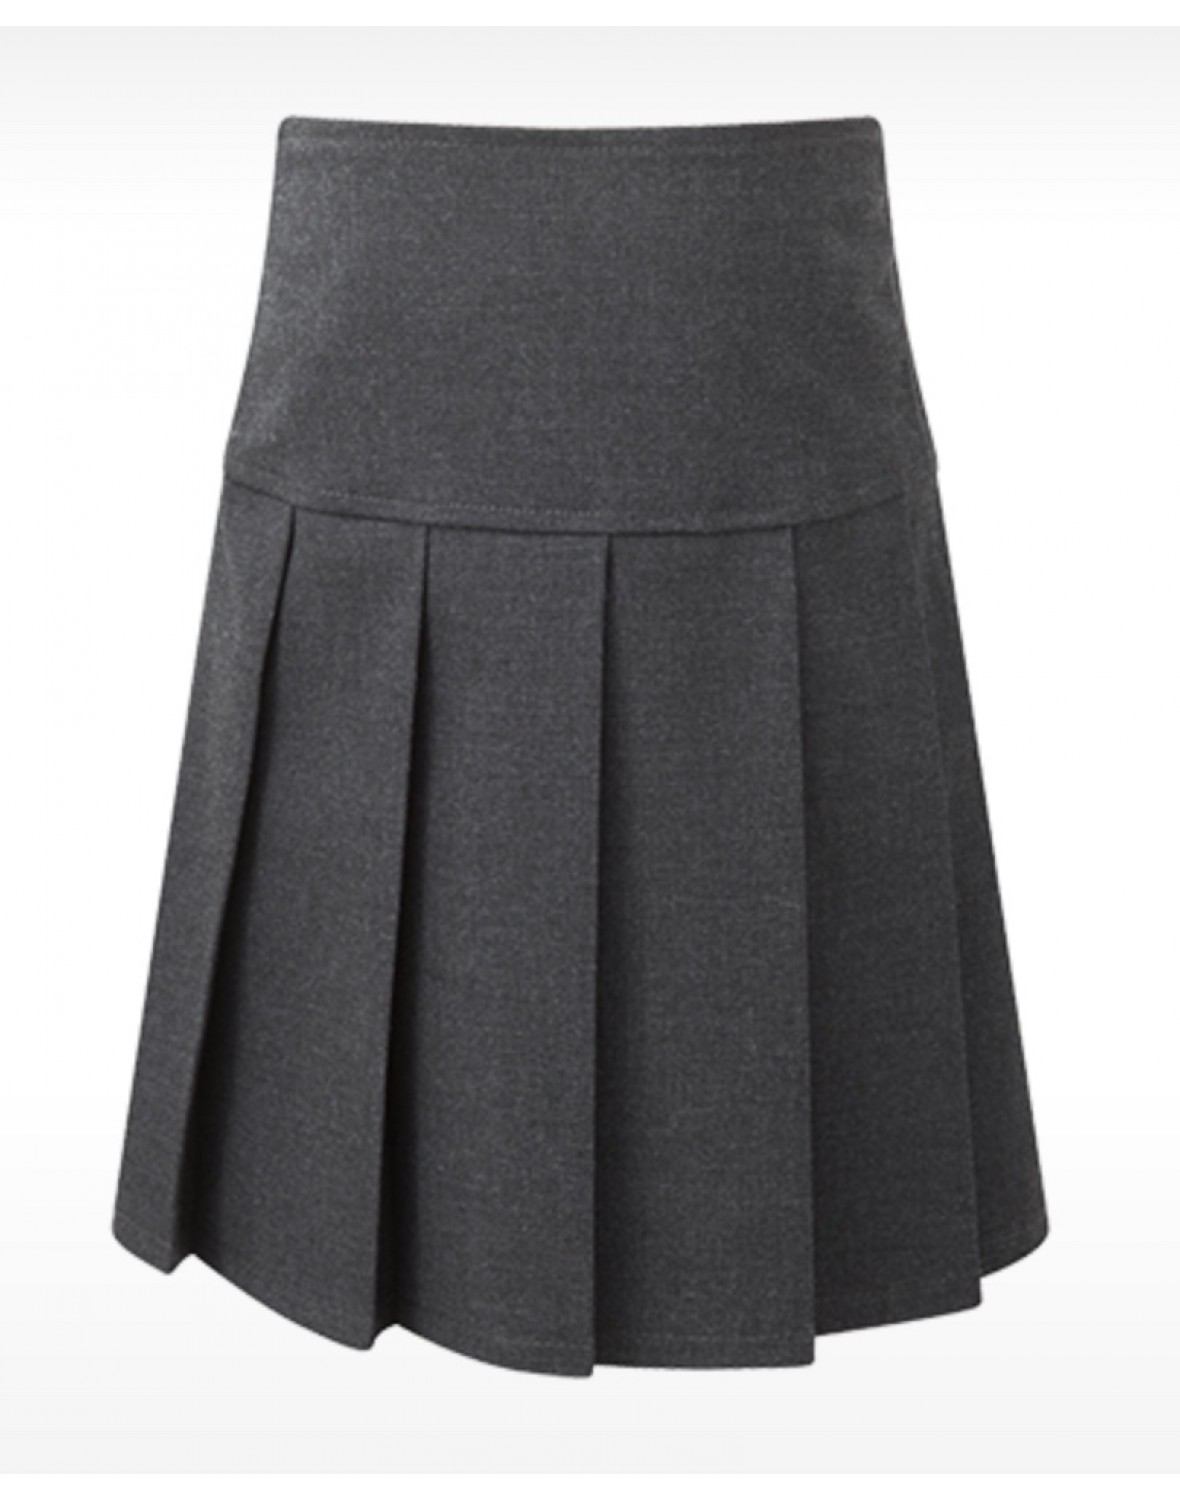 Girls Grey Skirt Age 10-11/11